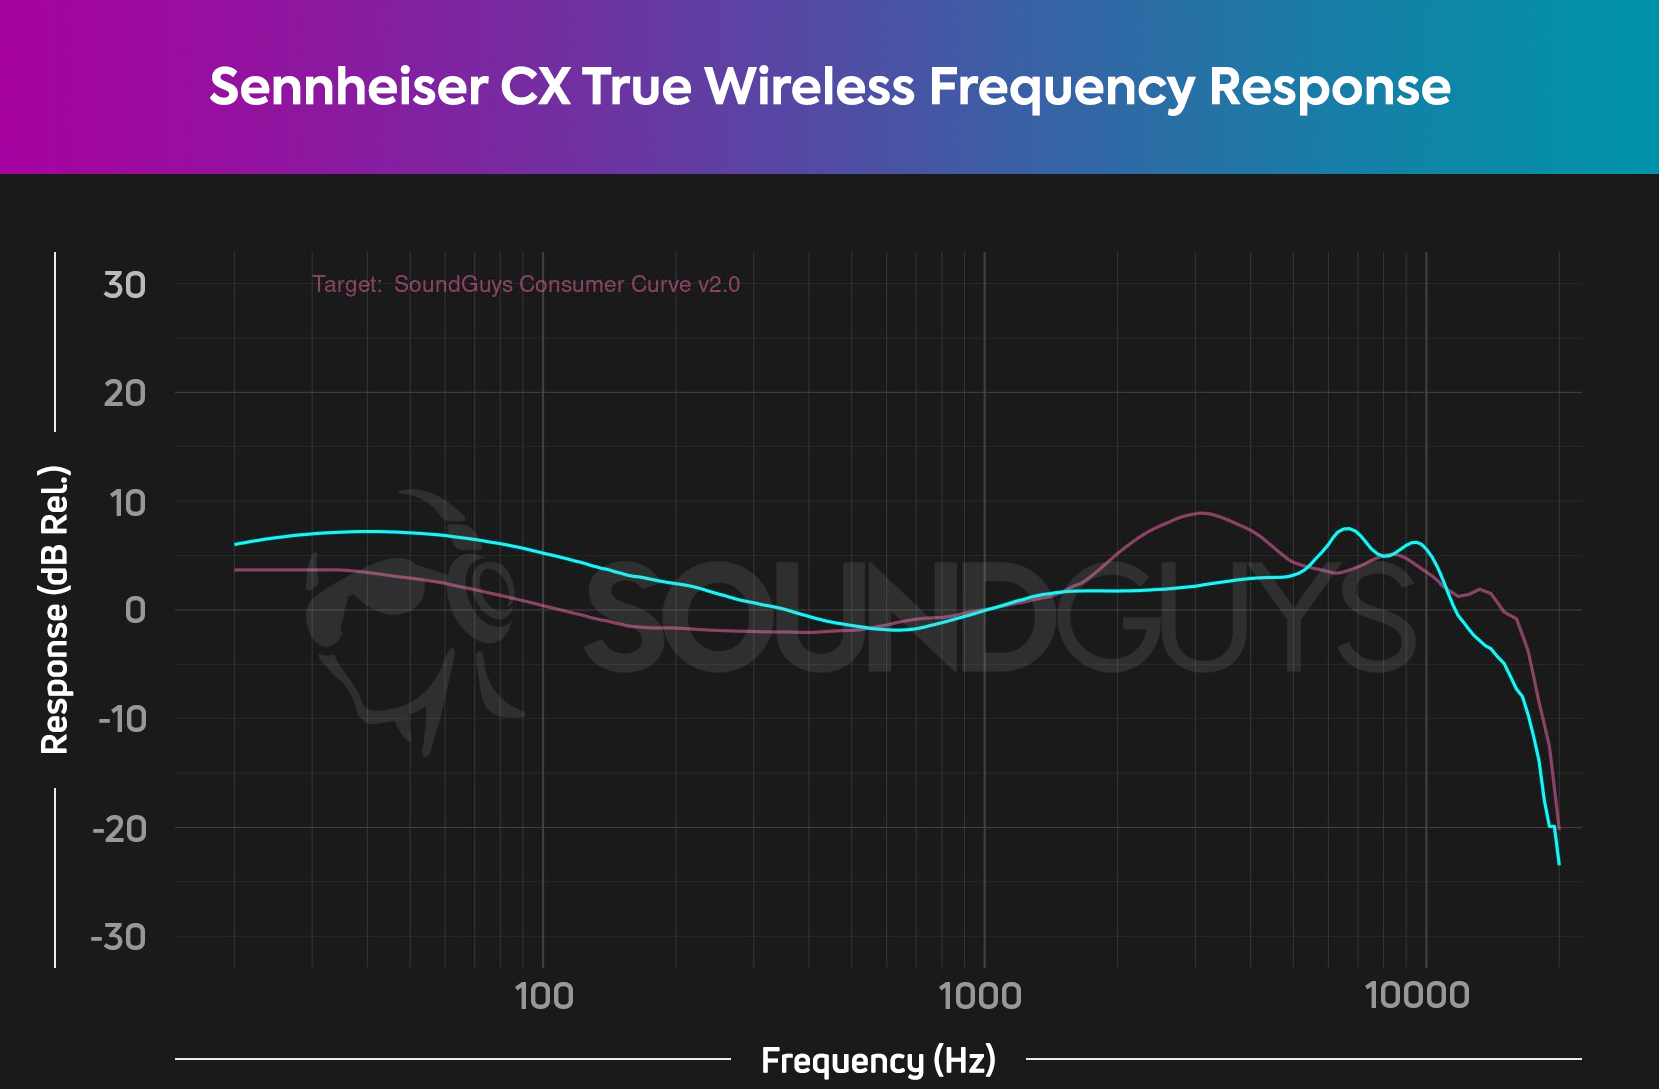 Sennheiser CX True Wireless frequency response graph.